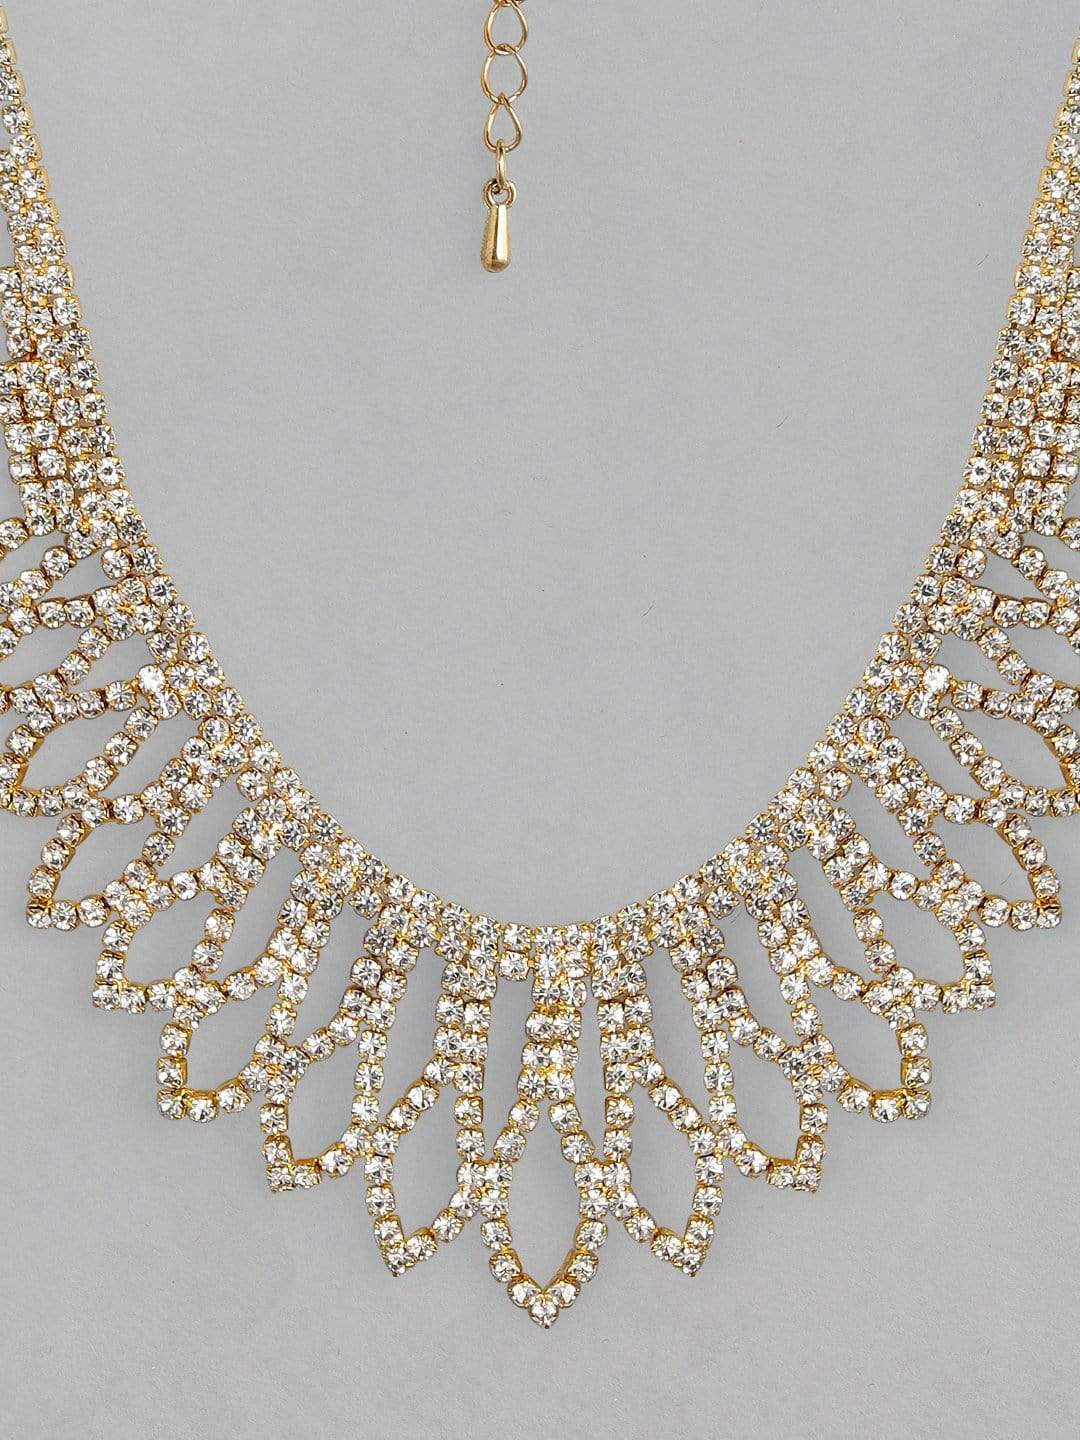 Amoare® Paris Small Necklace in Gold Vermeil - Rhinestone